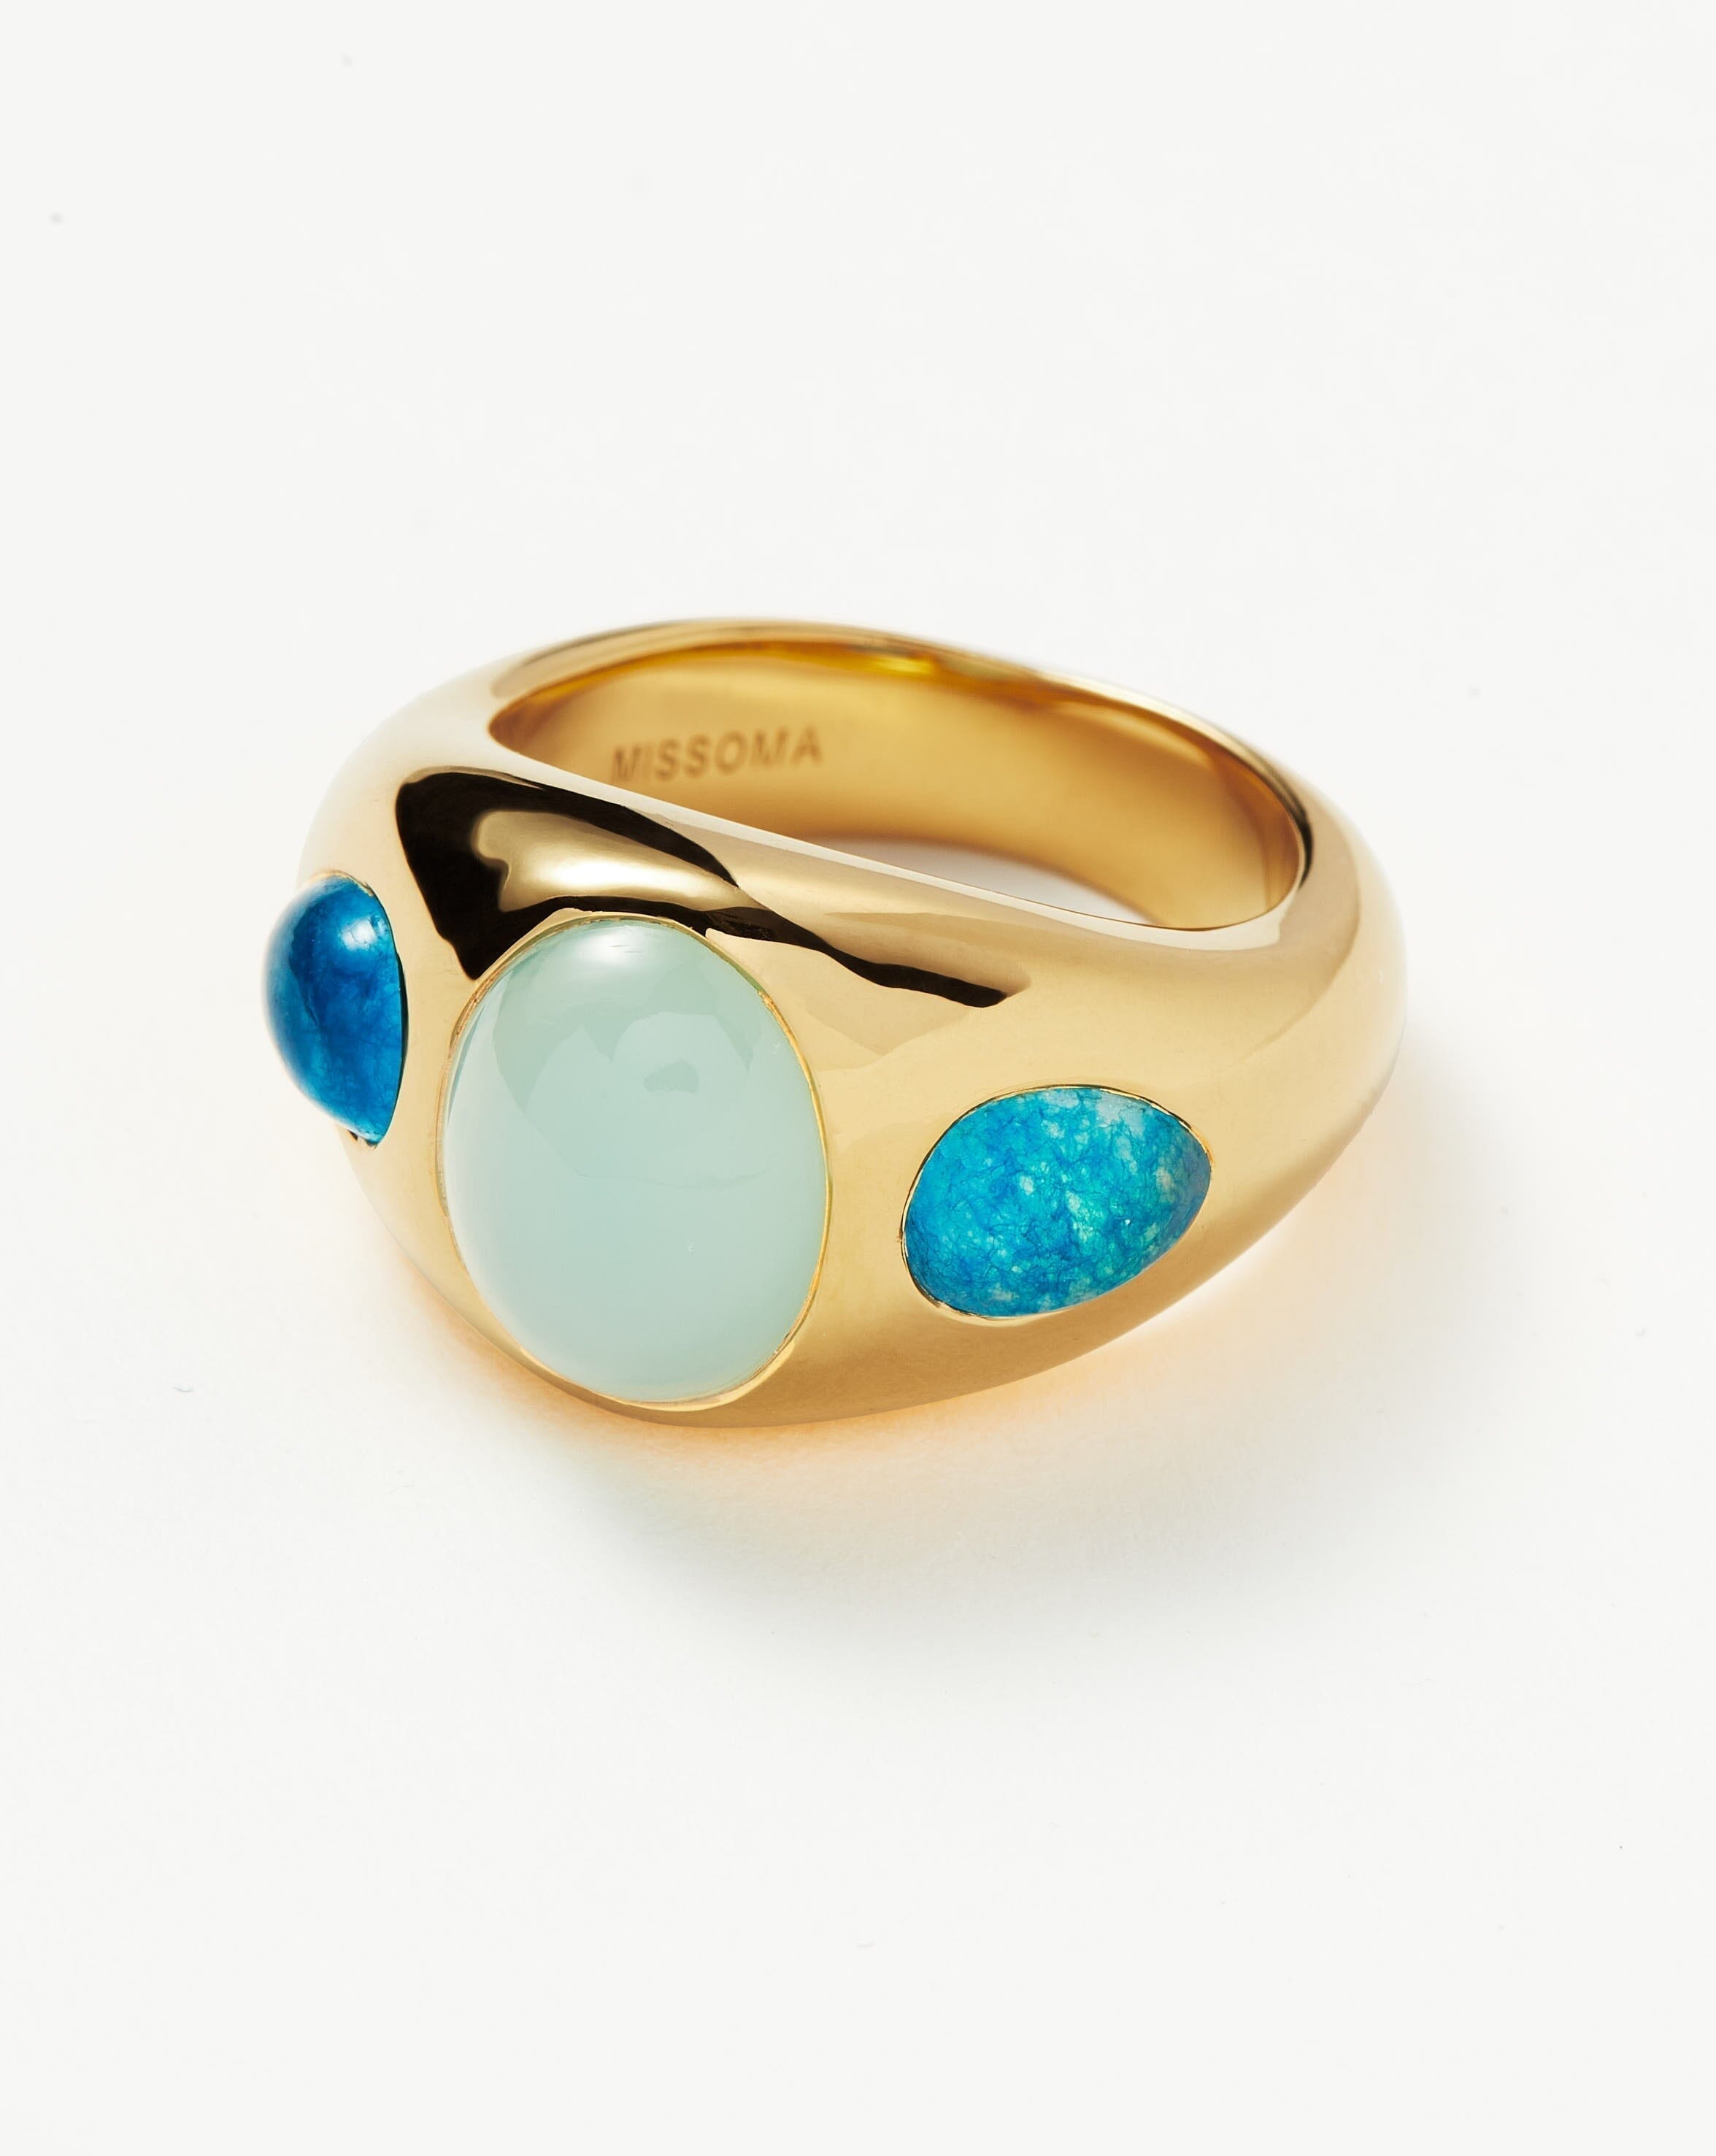 Acqua, Coloured gem, diamonds and inlay ring